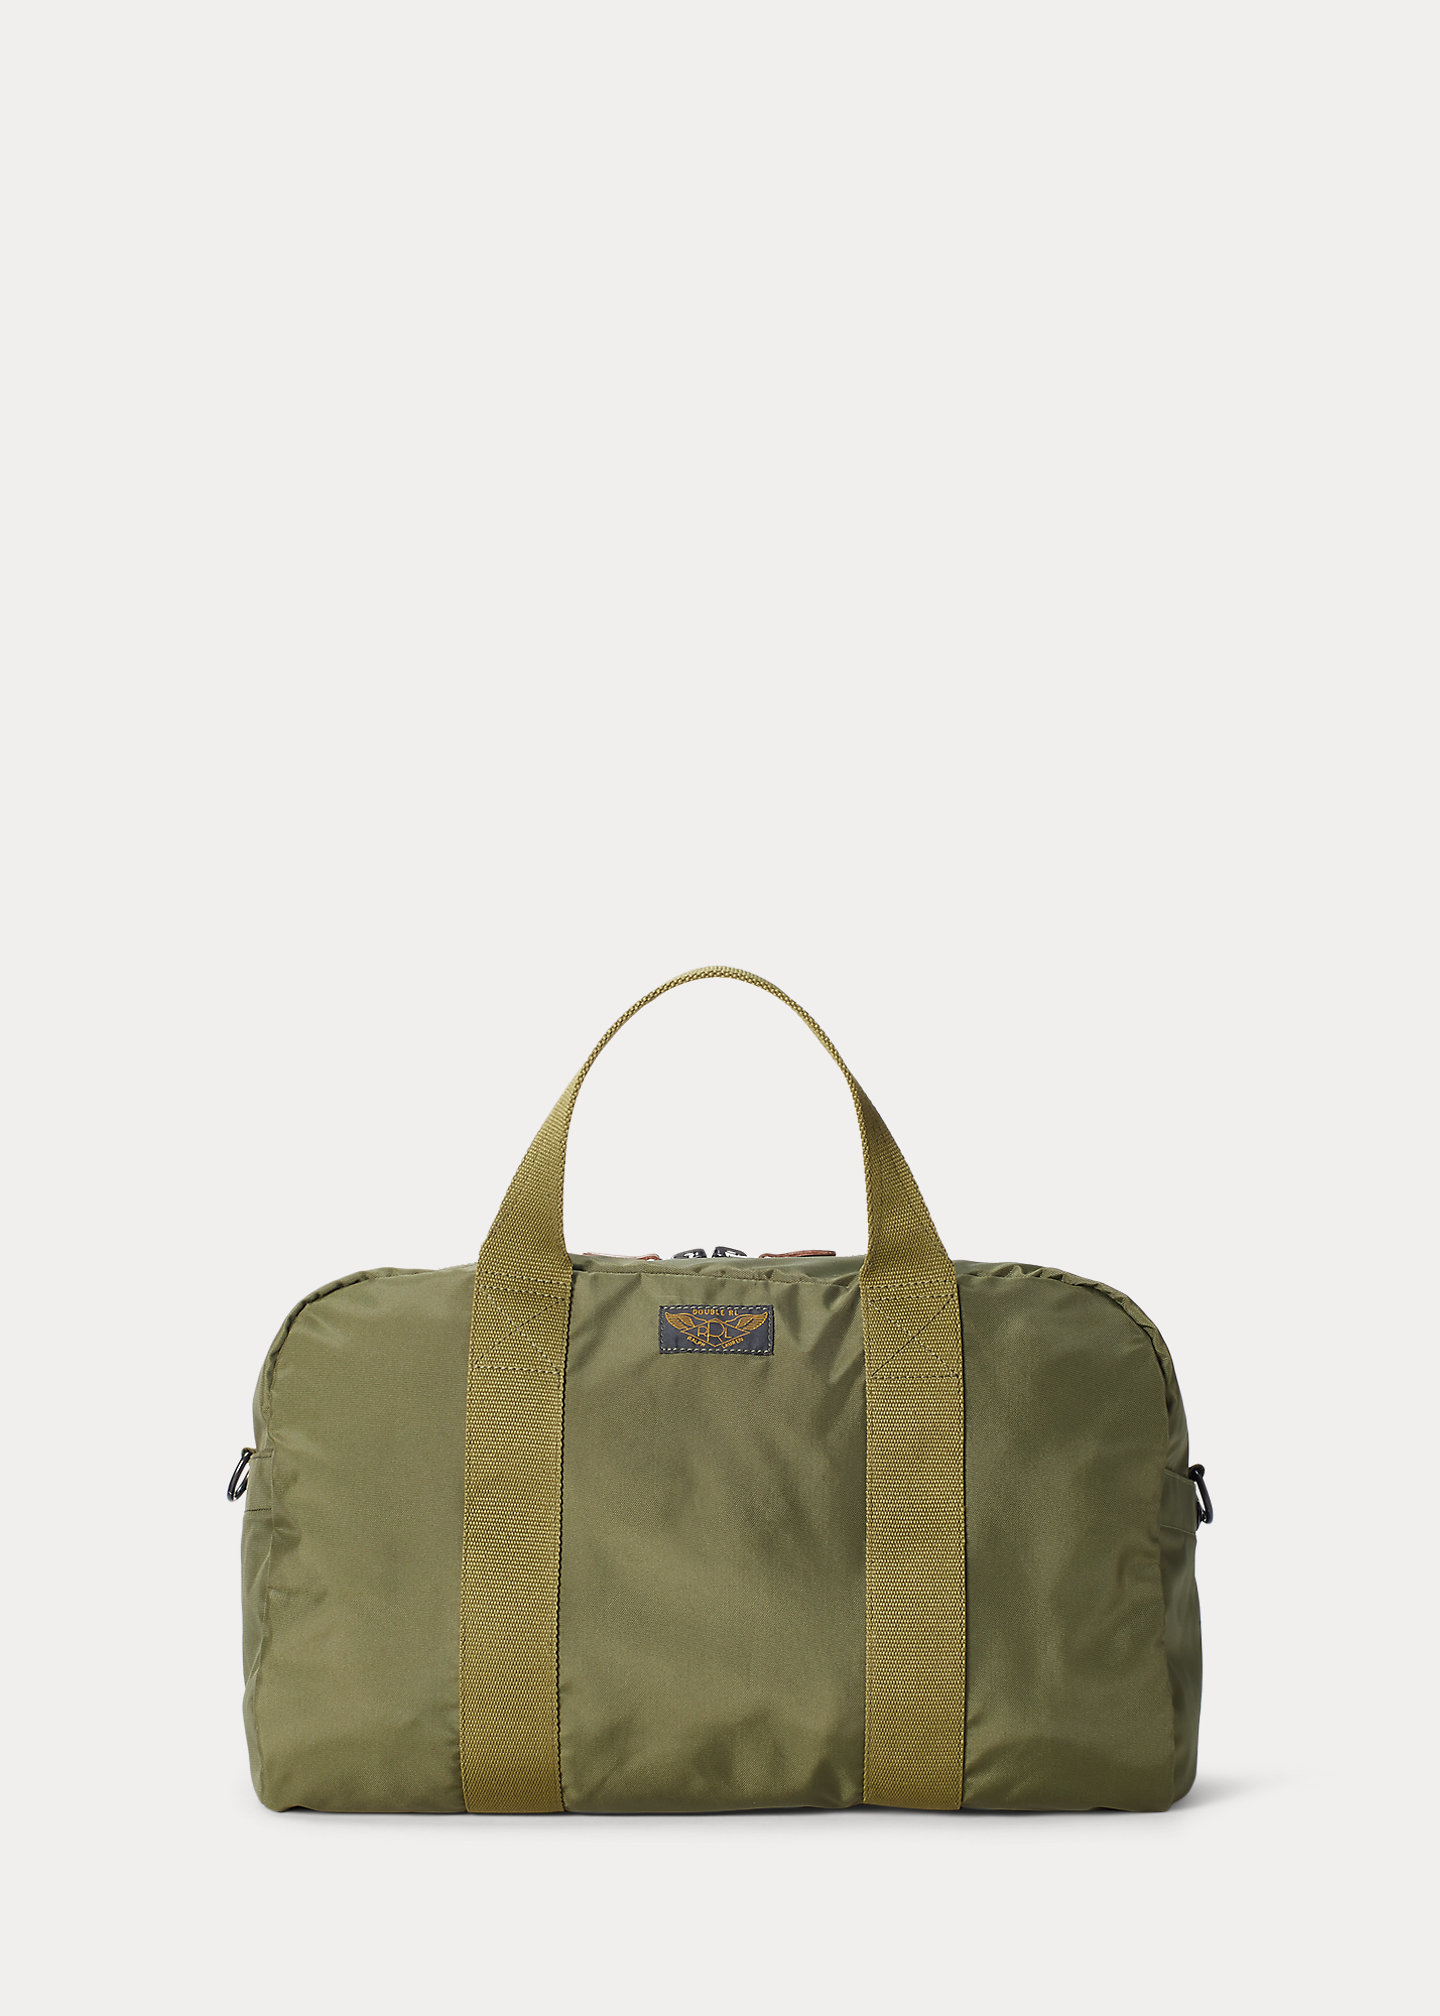 stylish handbags handbags Shoulder Bags